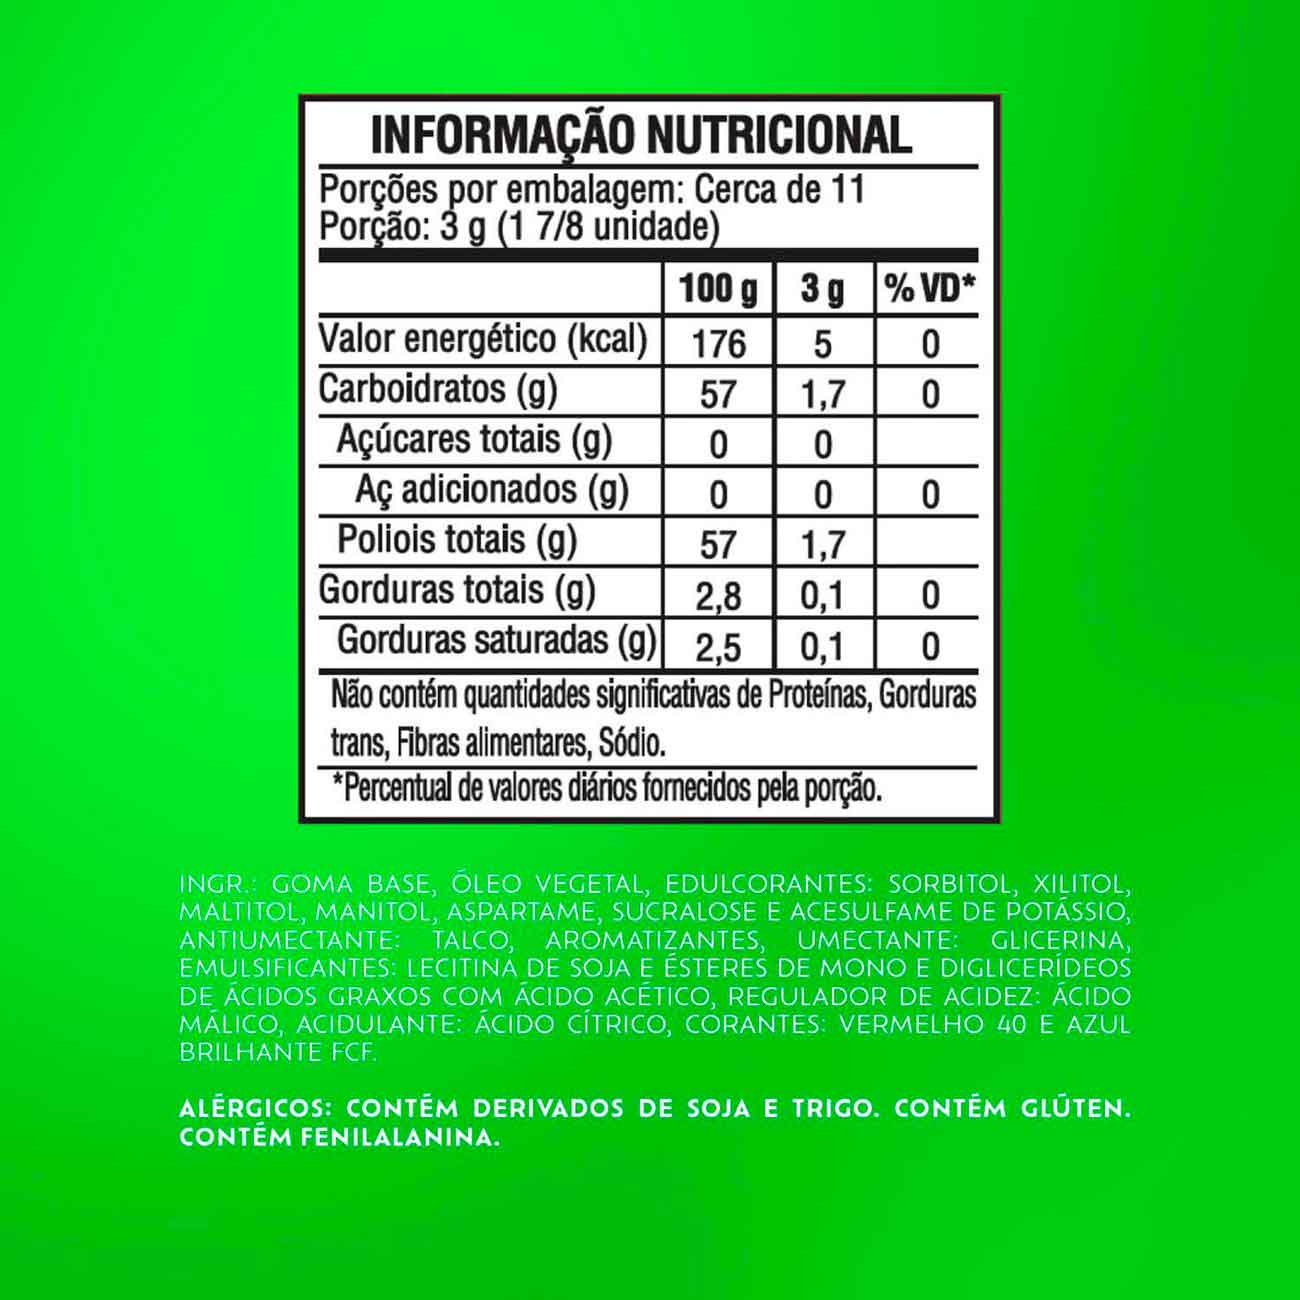 Chiclete Trident Morango 32g - Pacote com 4 Embalagens